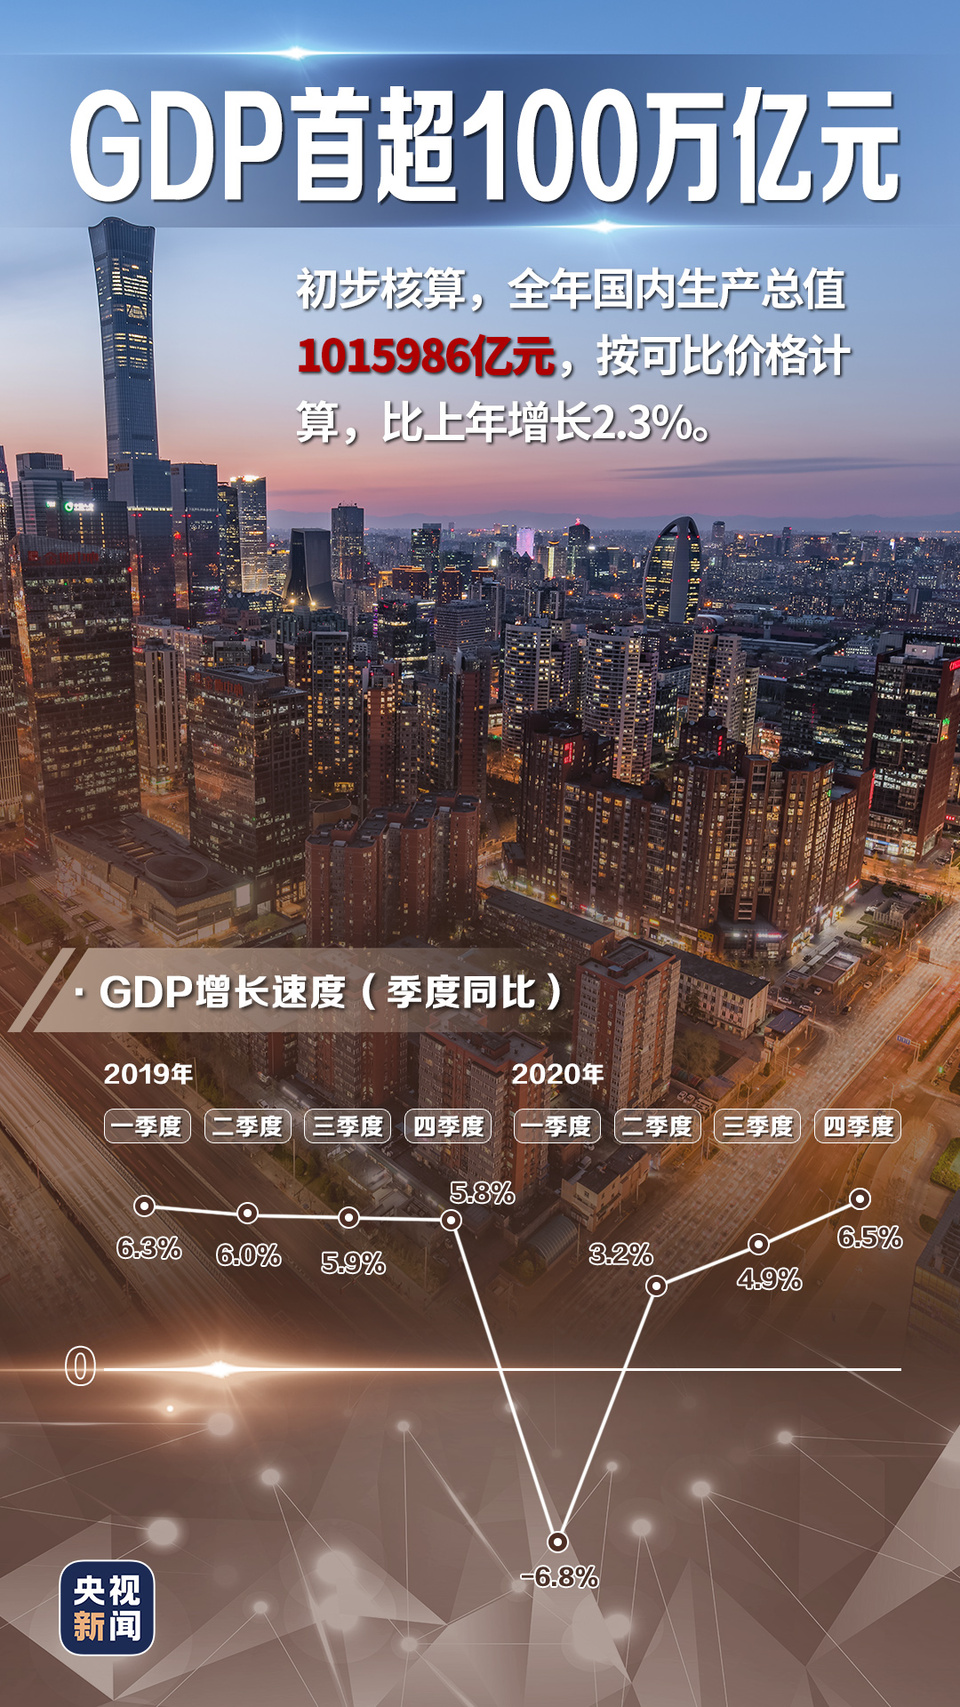 GDP首超100万亿 贸易顺差3.7万亿……中国经济成绩单划重点→